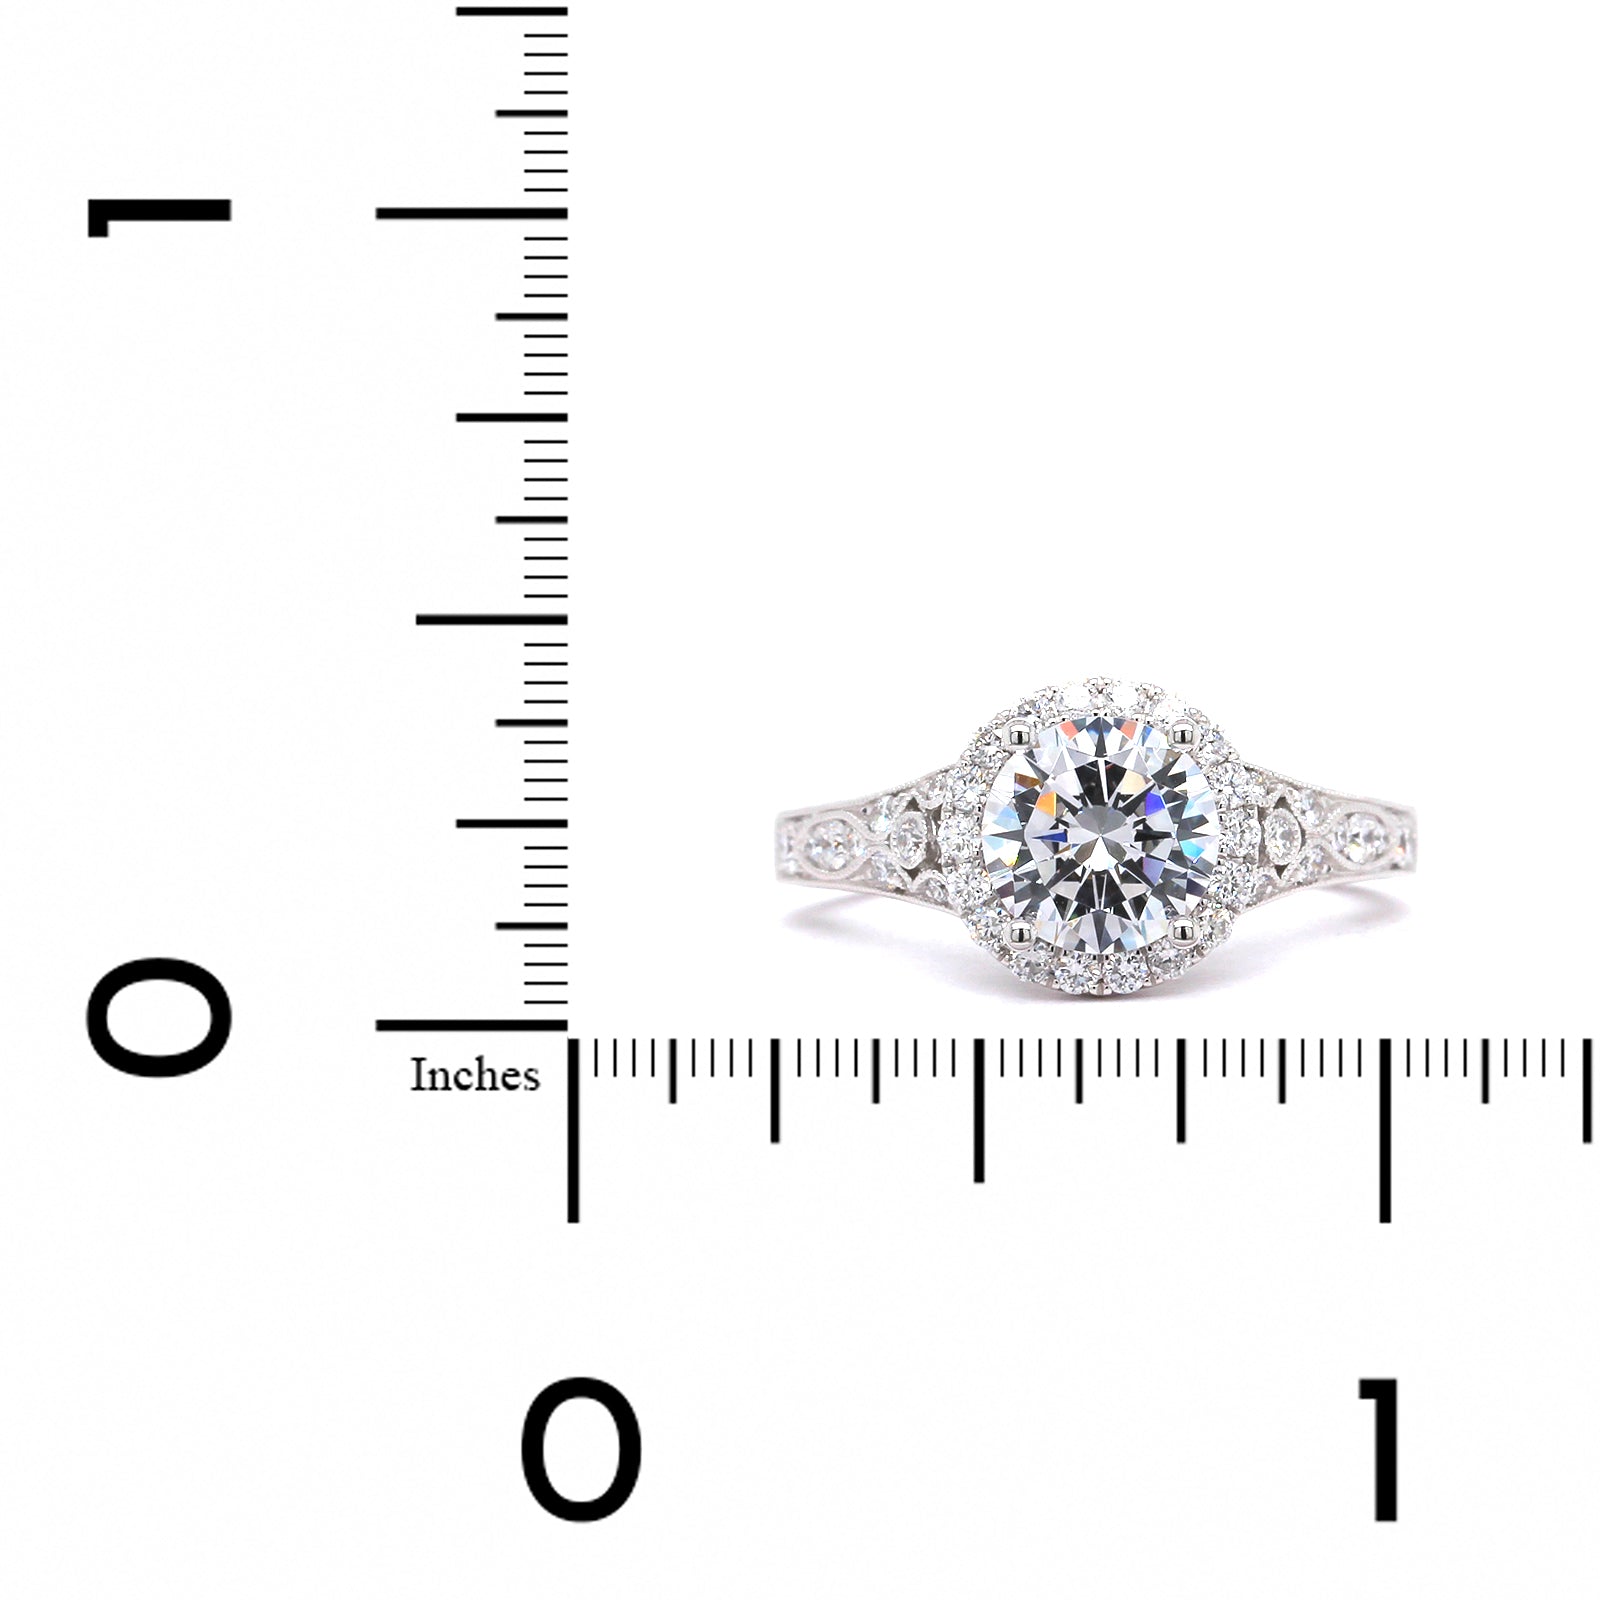 18K White Gold Vintage Style Engagement Ring Setting